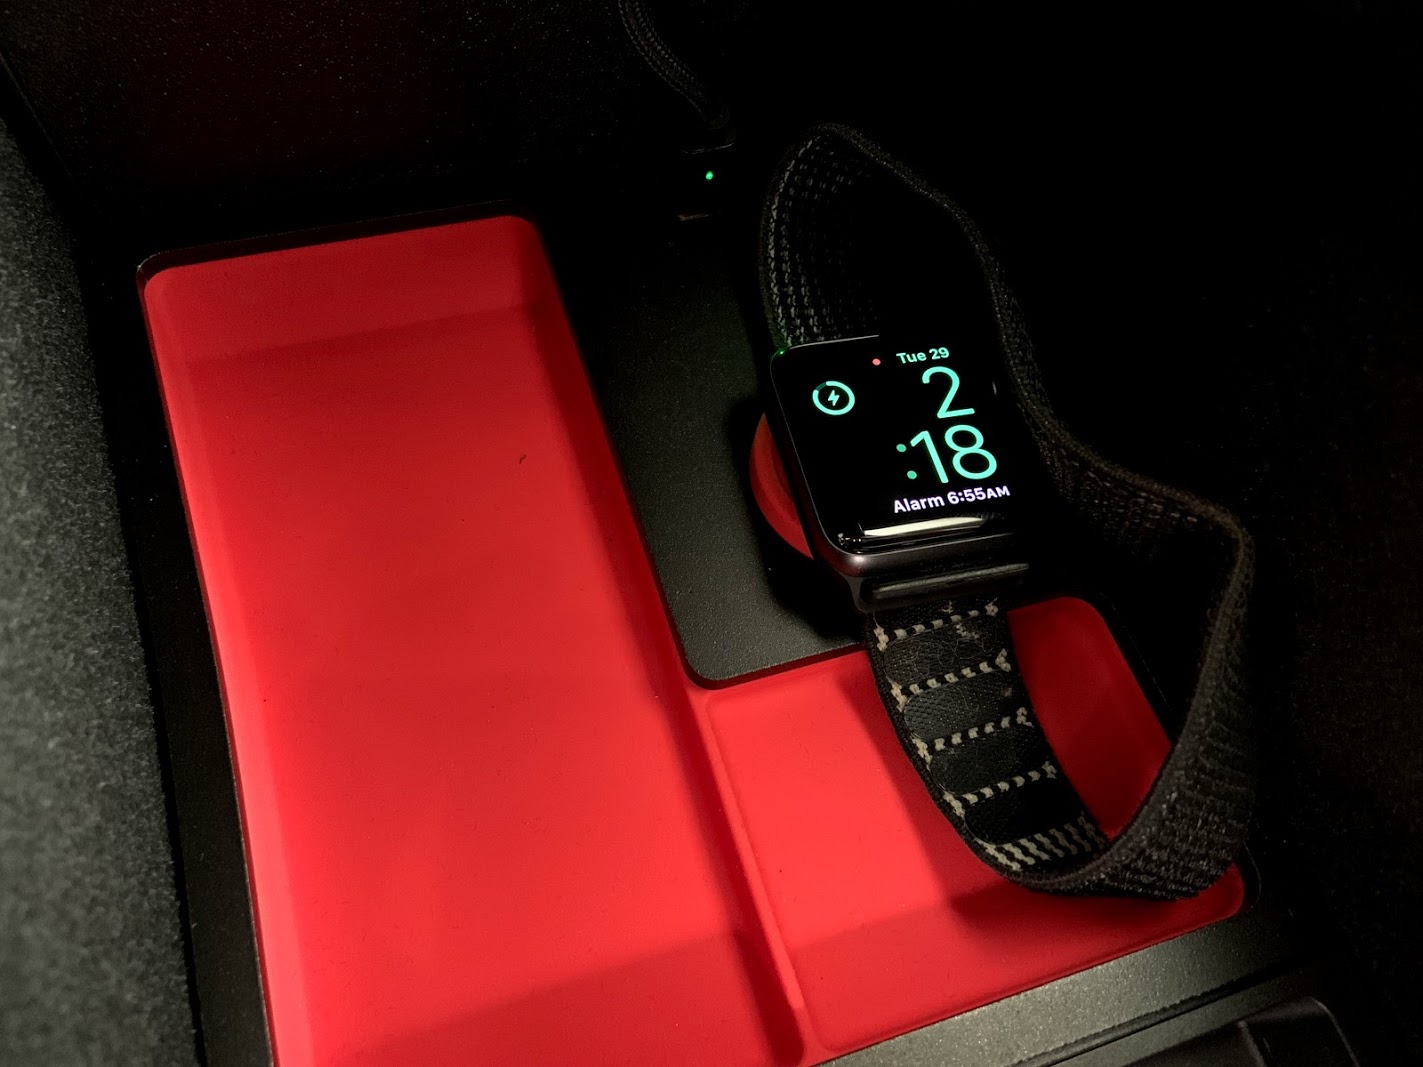 Jeda Tray Apple Watch charging